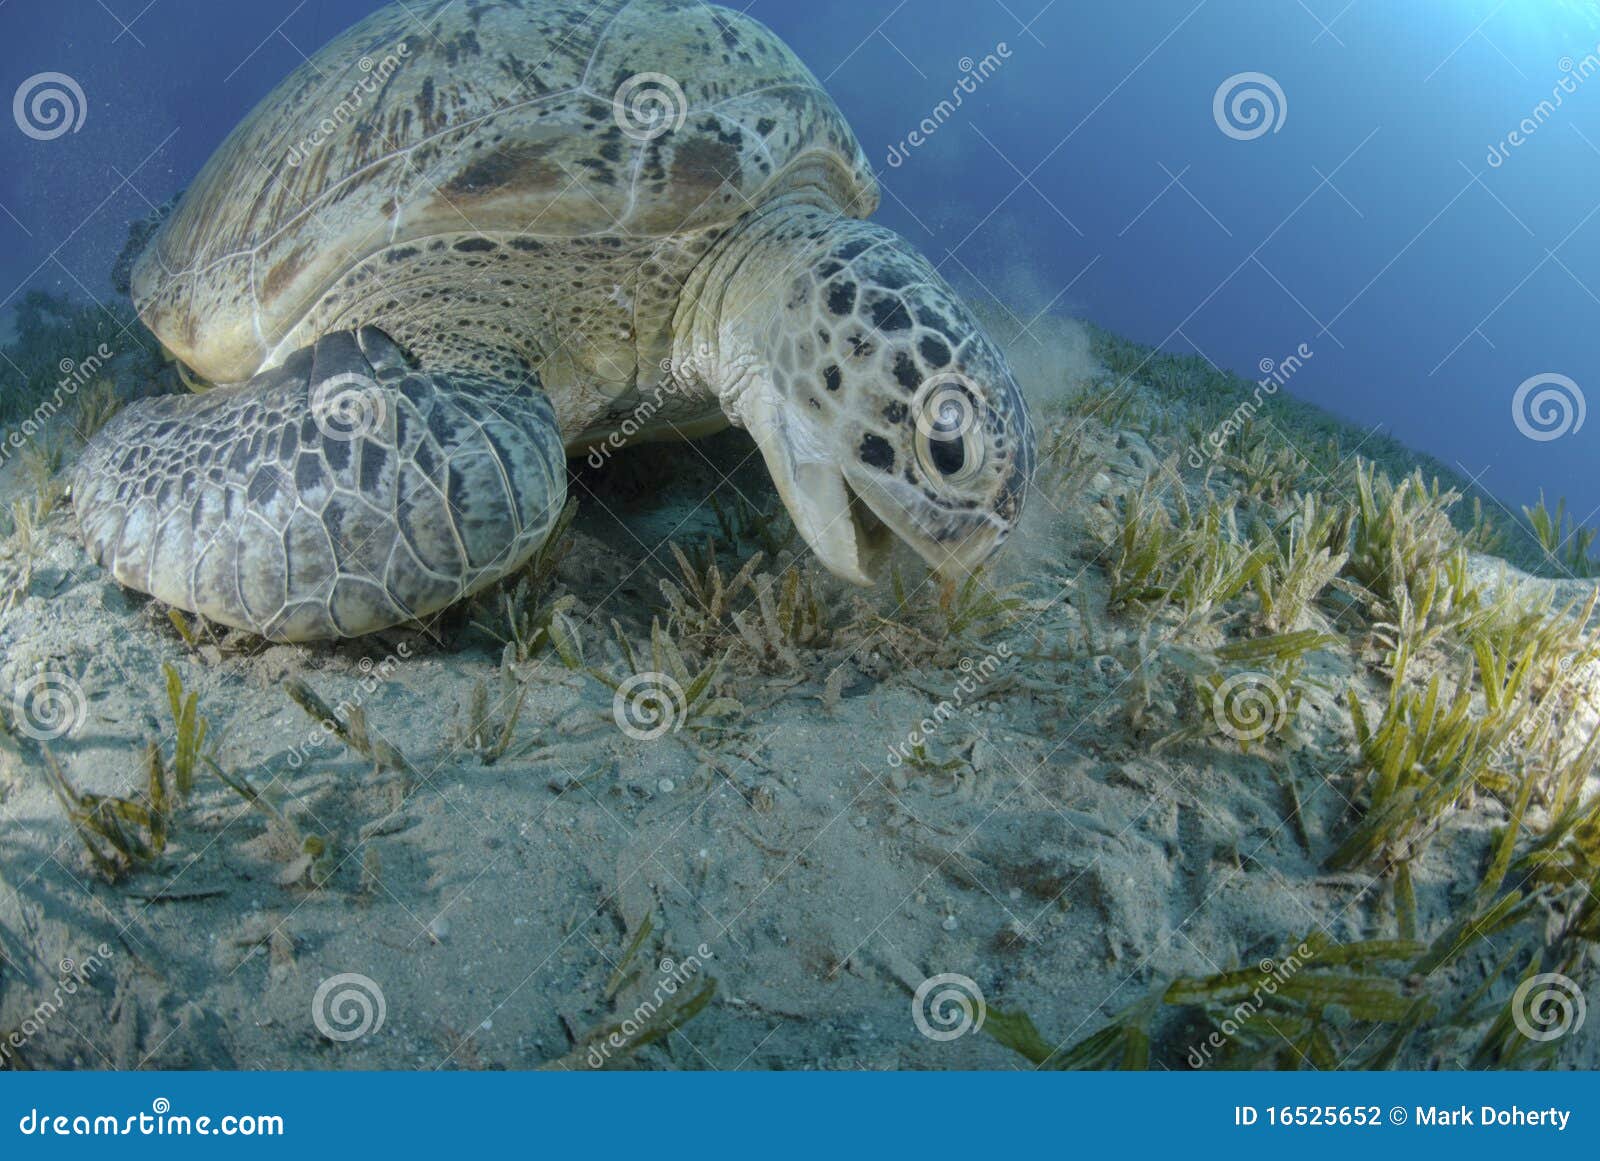 green sea turtle feeding on seagrass.